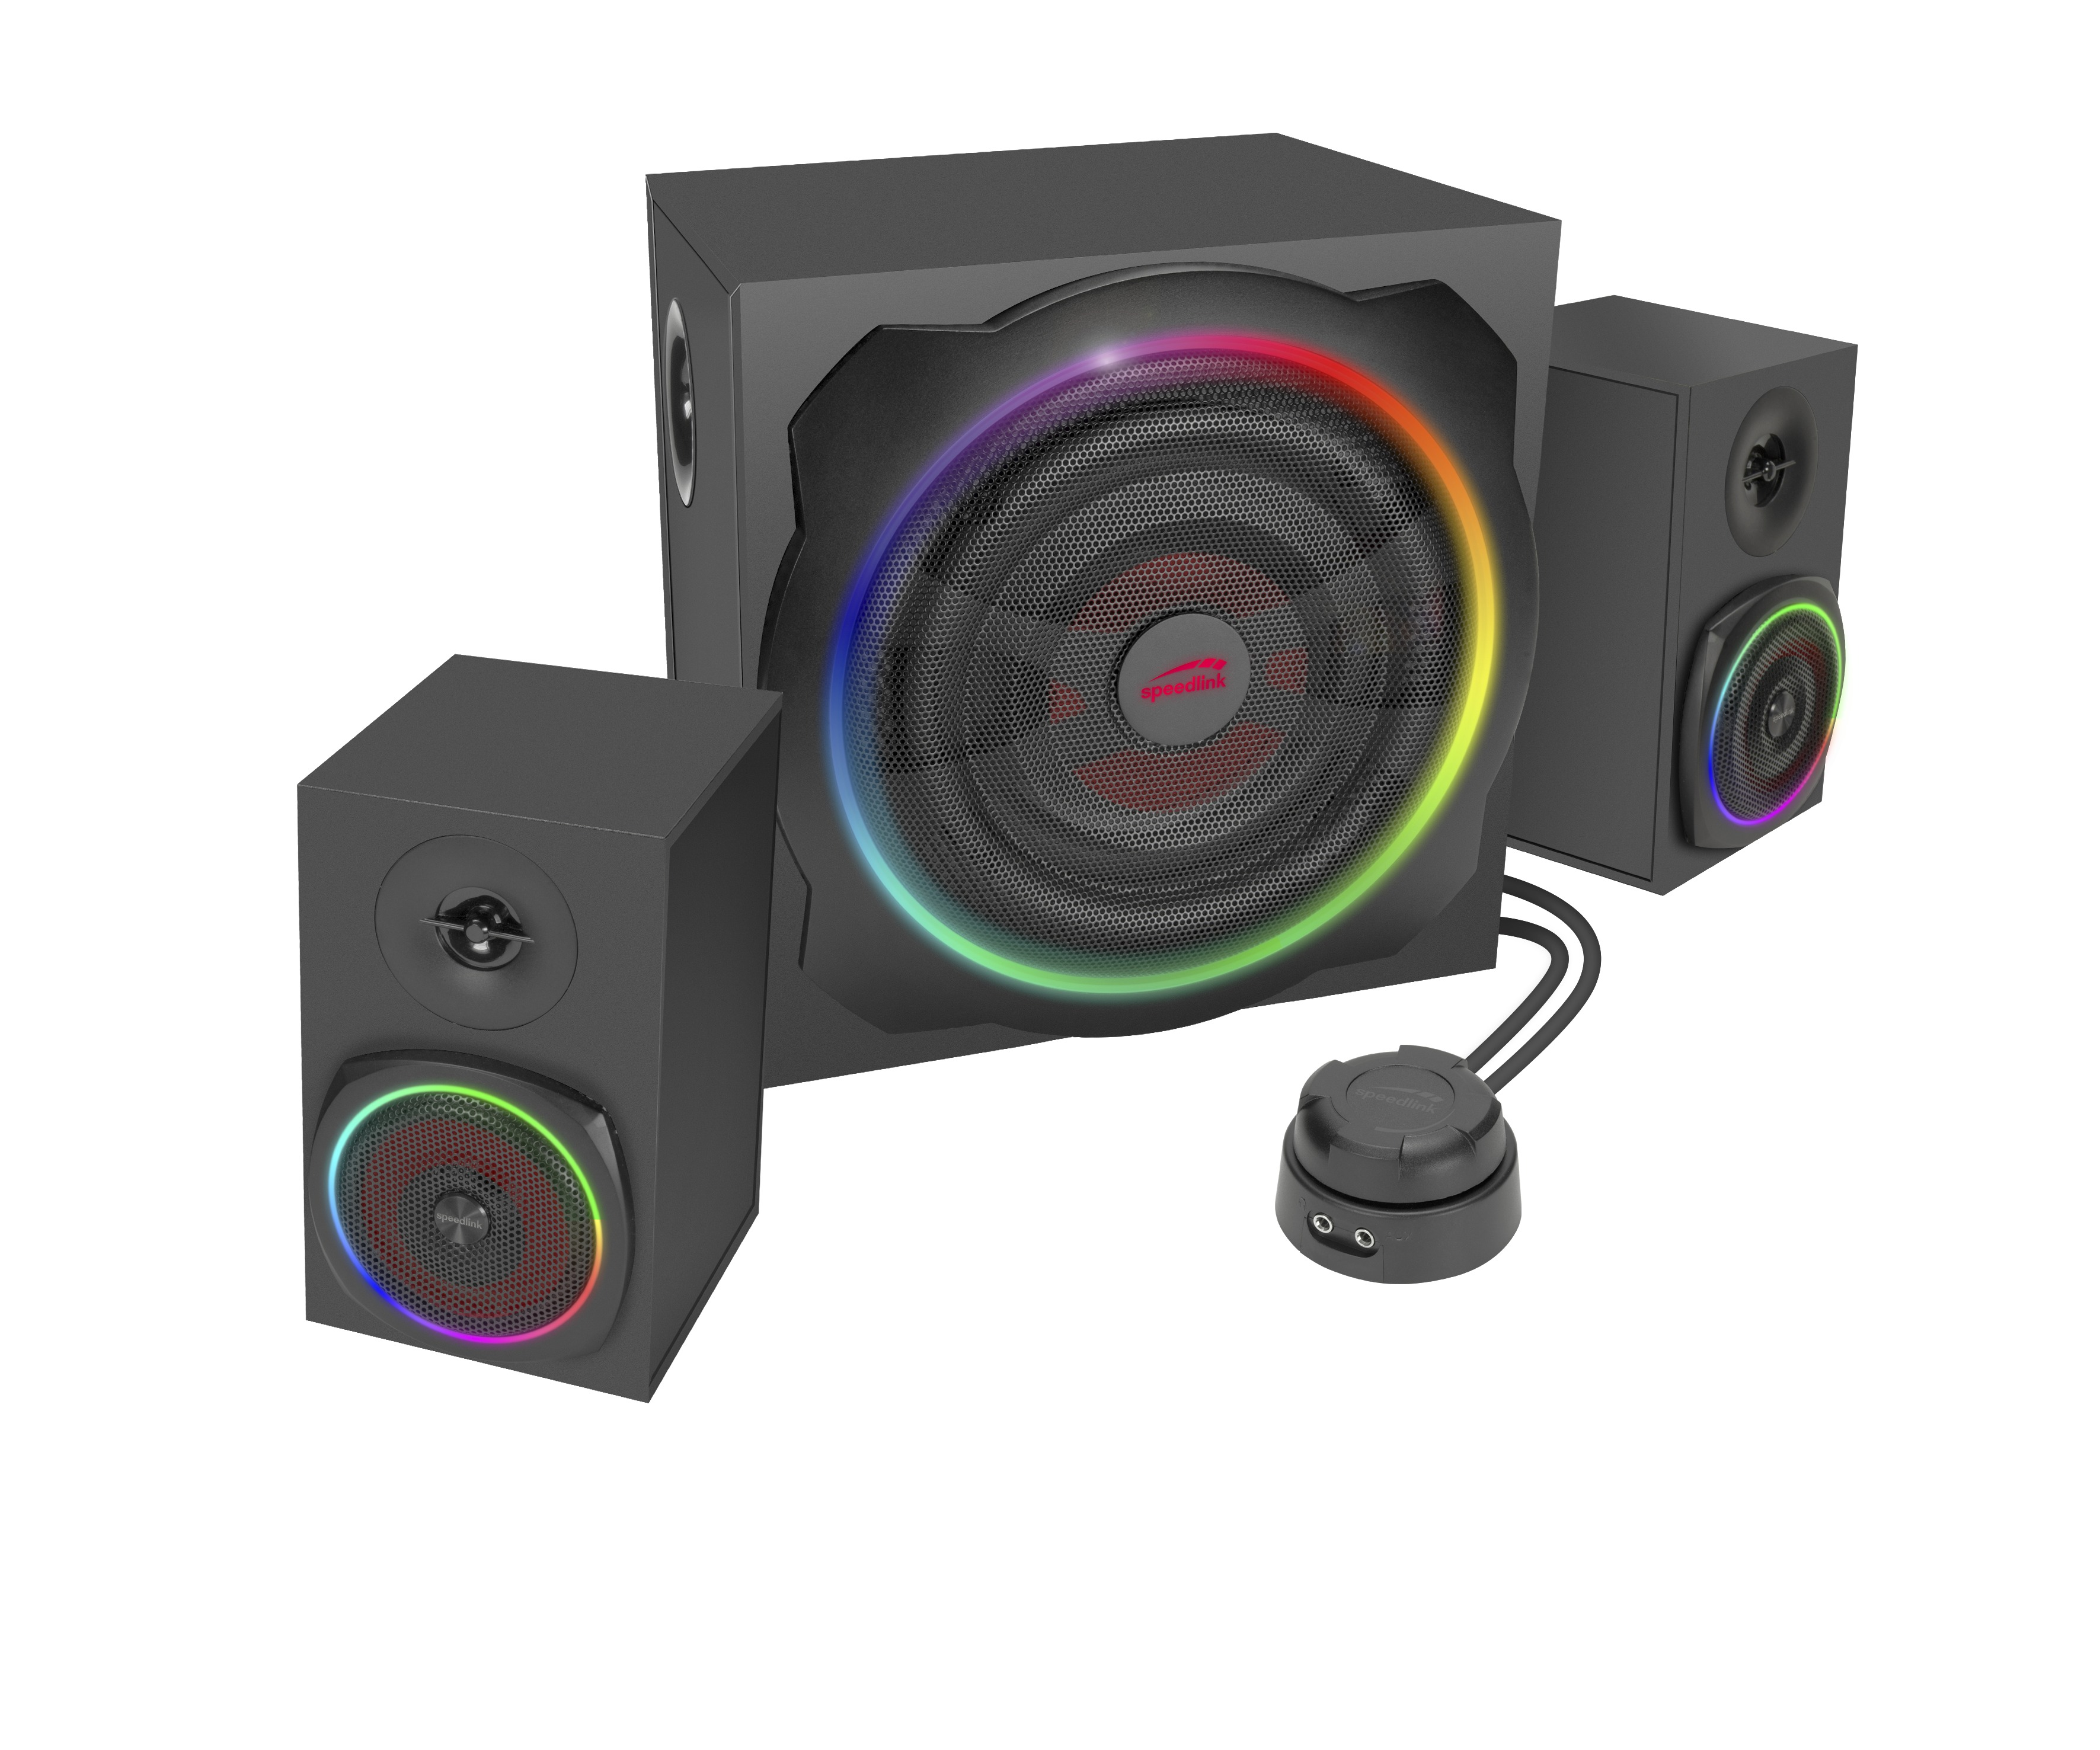 SPEEDLINK GRAVITY RGB 2.1-Lautsprechersystem